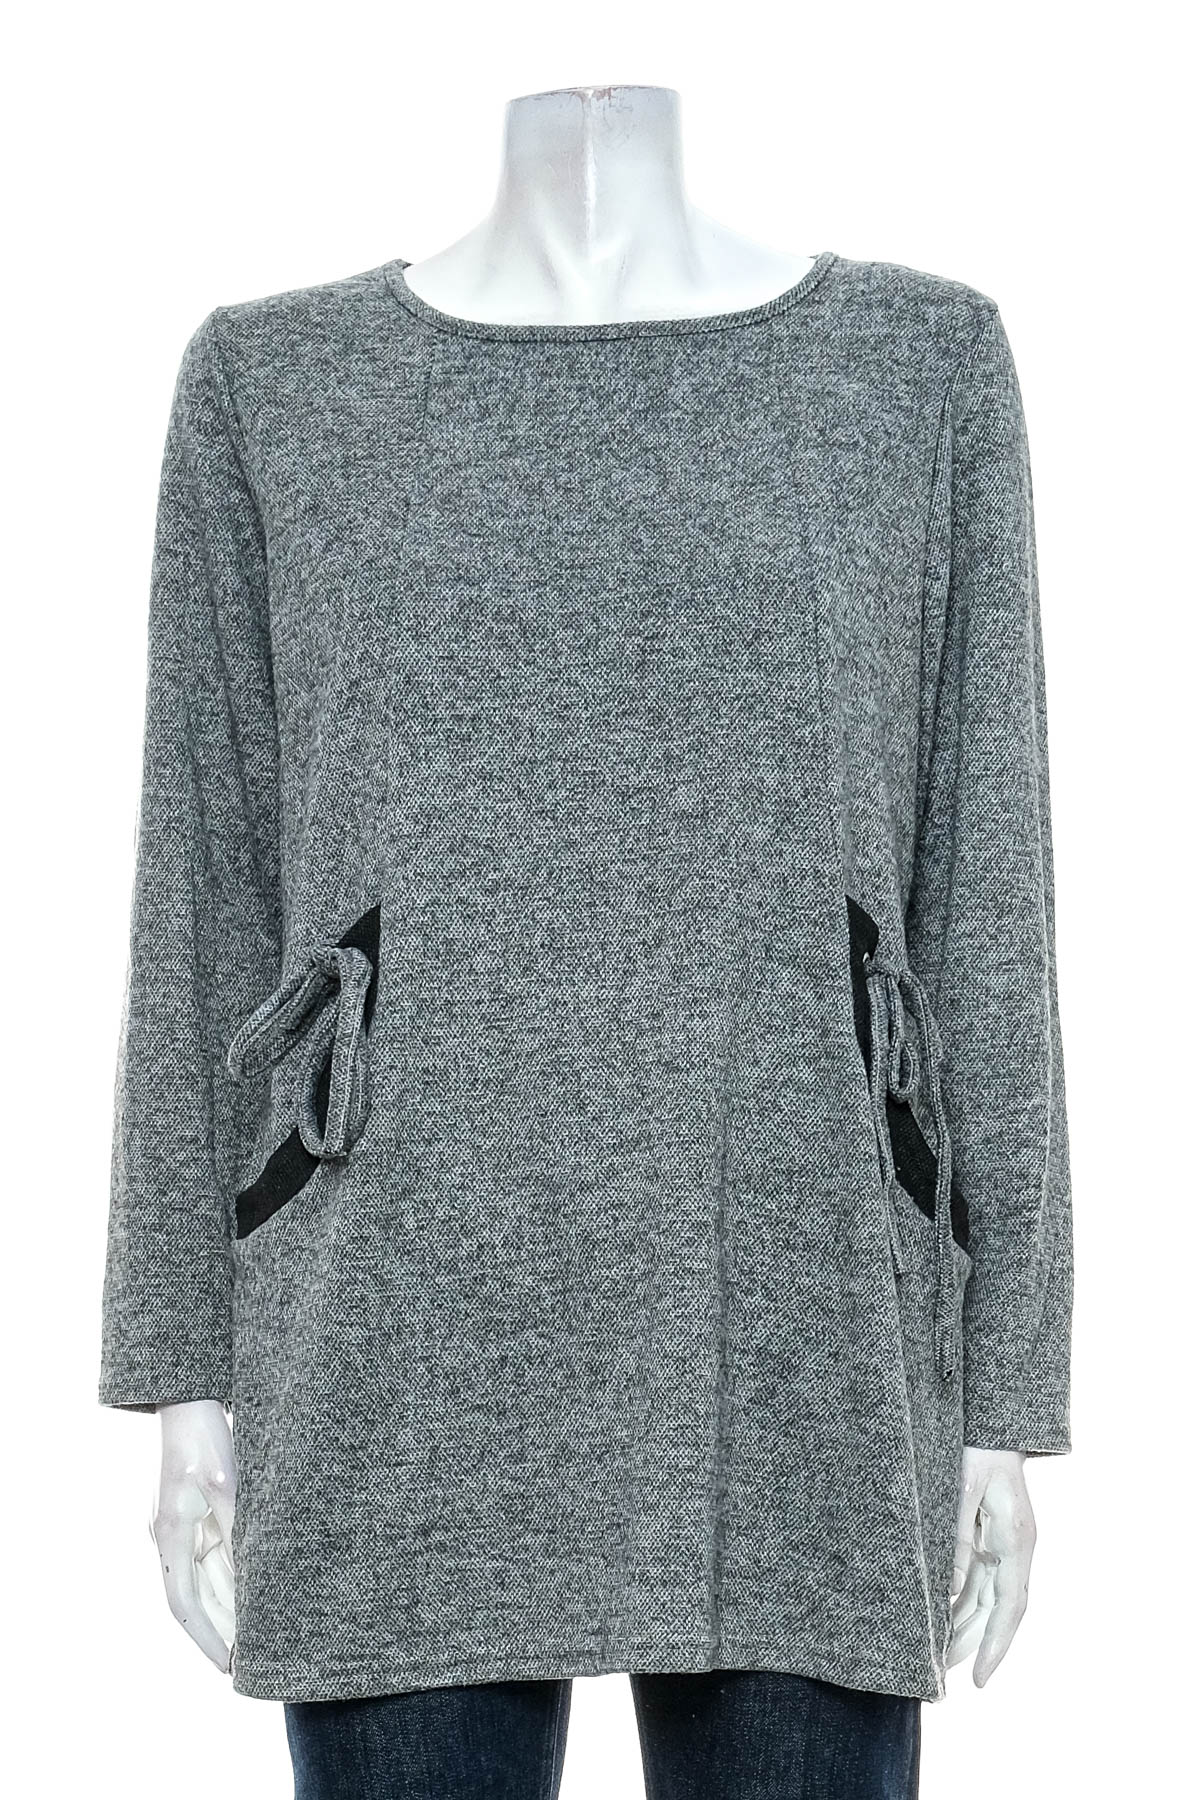 Women's sweater - L.G.M. - 0